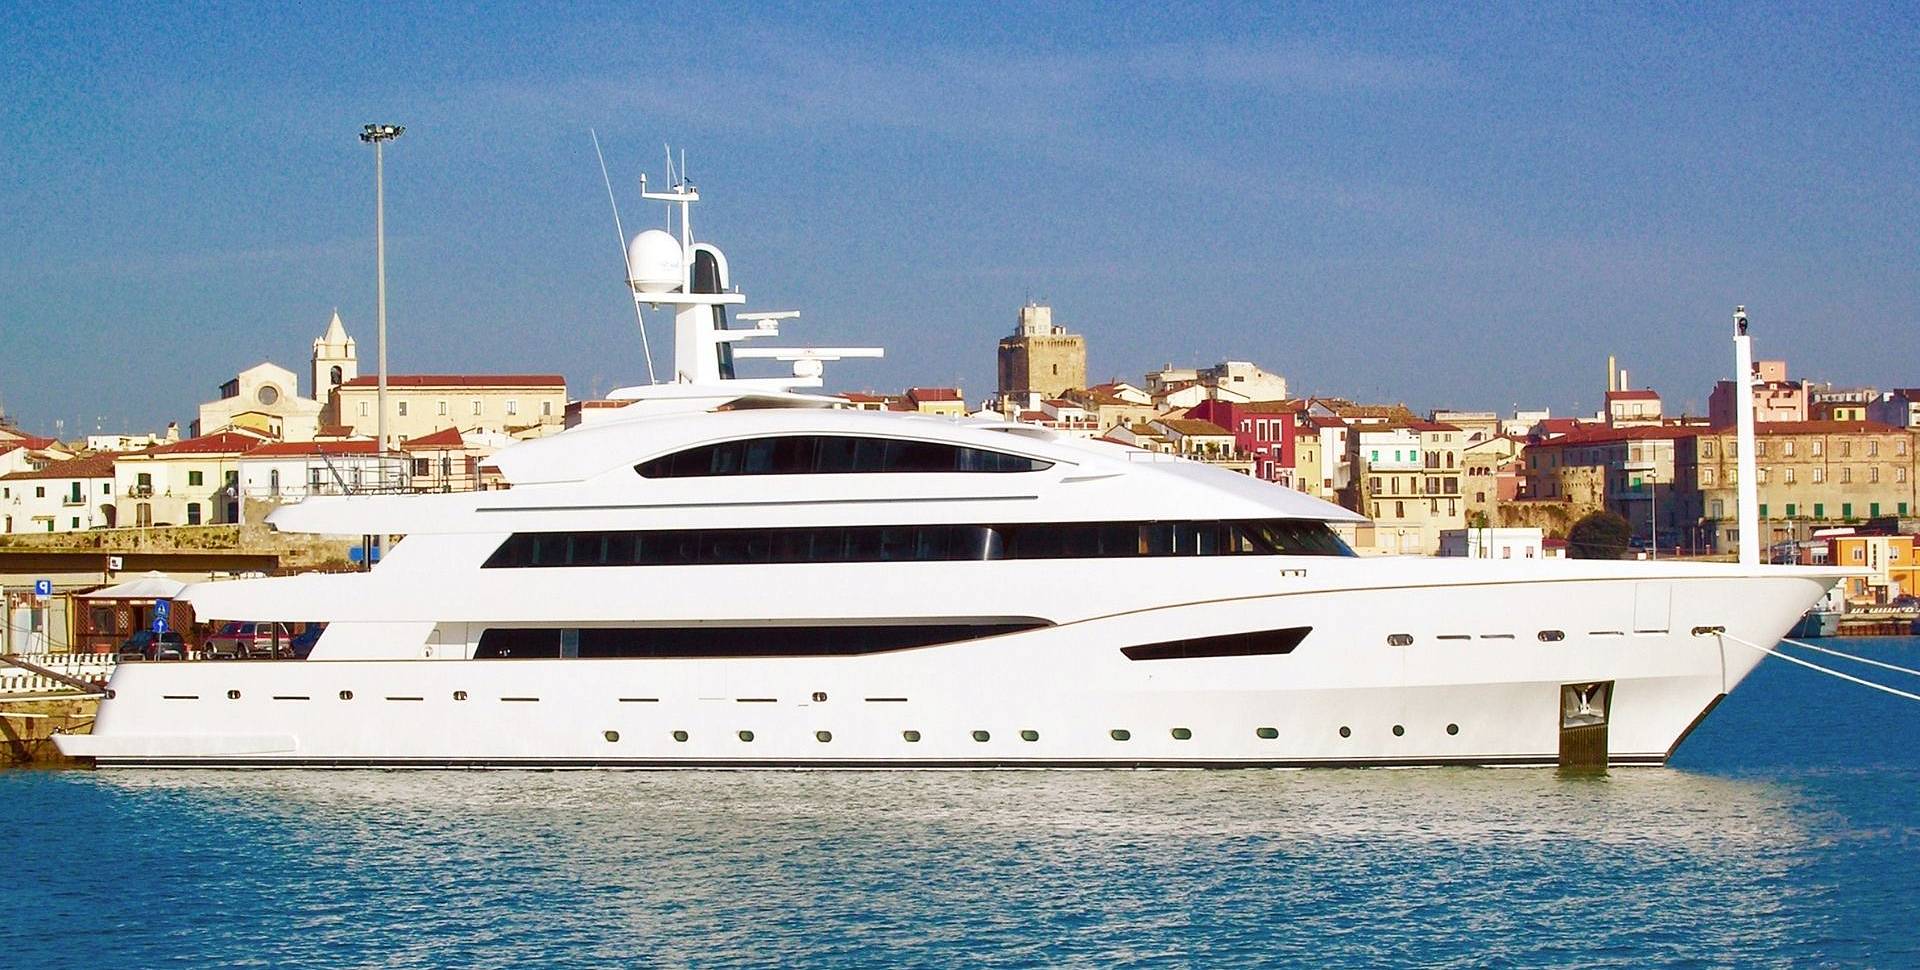 BEATRIX yacht